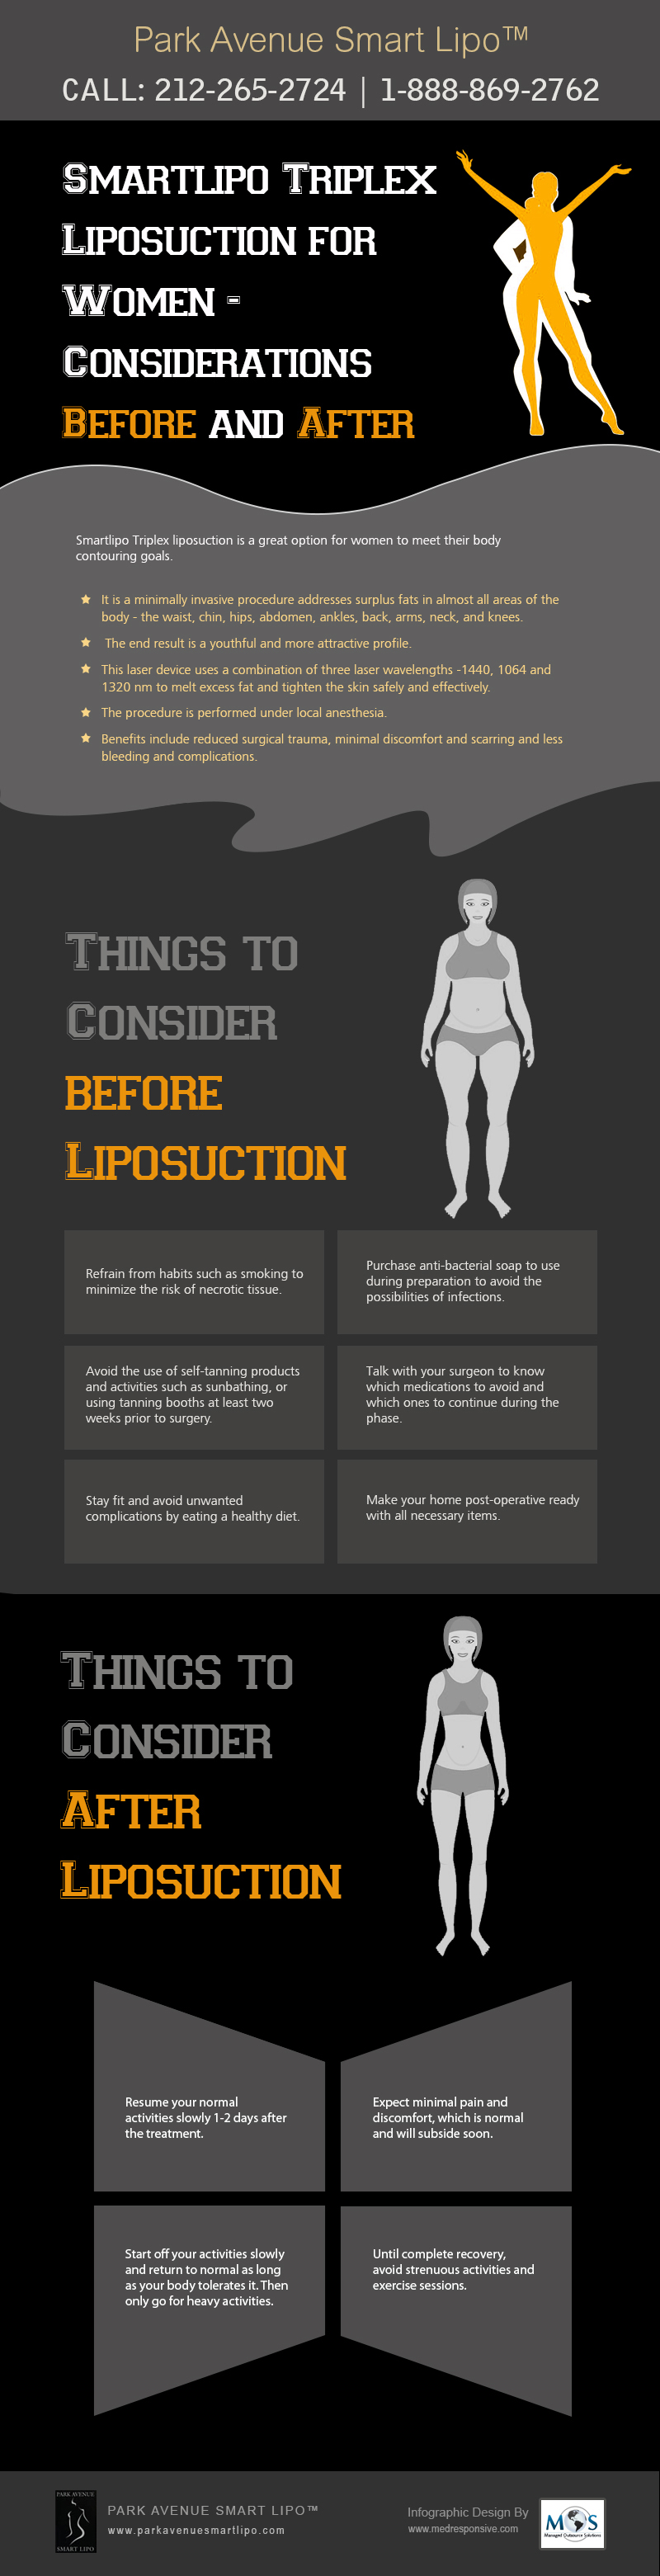 Smartlipo Triplex Liposuction for Women